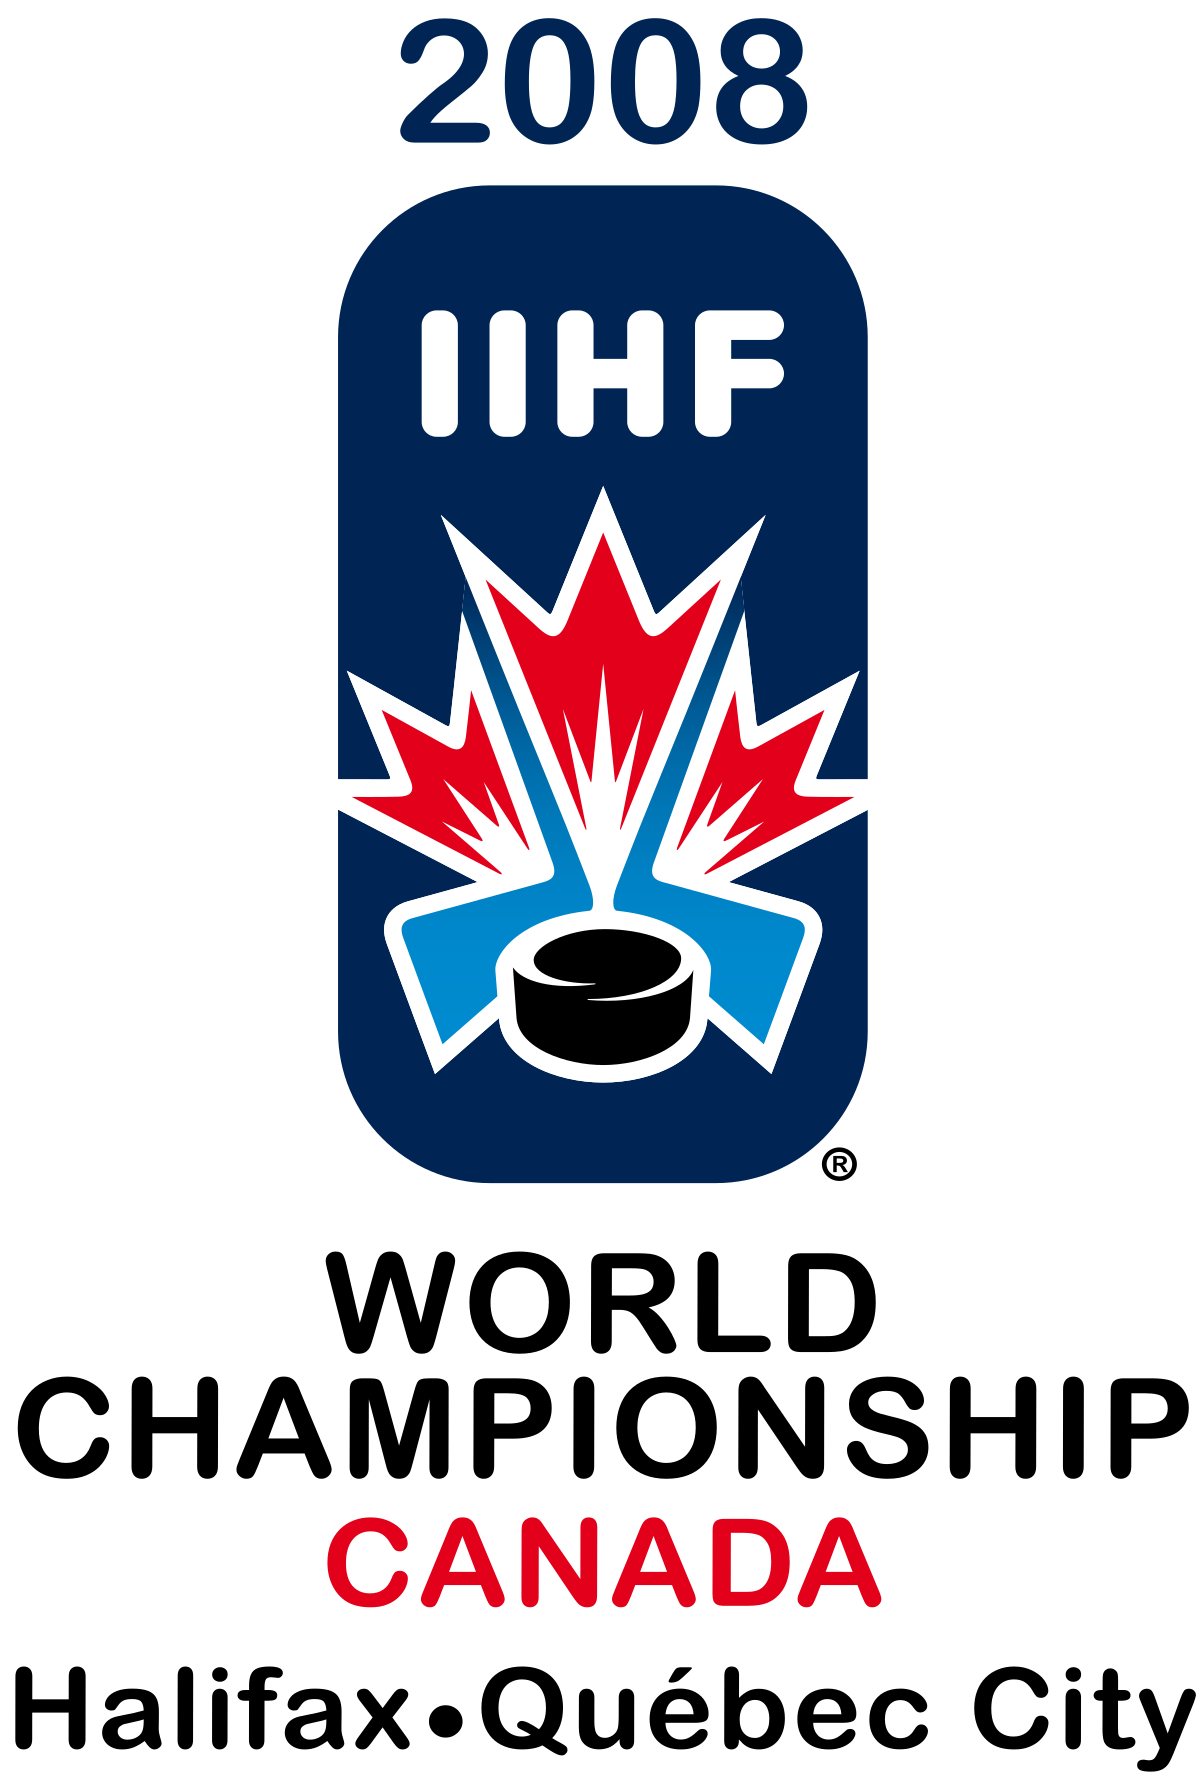 2008 IIHF World Championship - Wikipedia